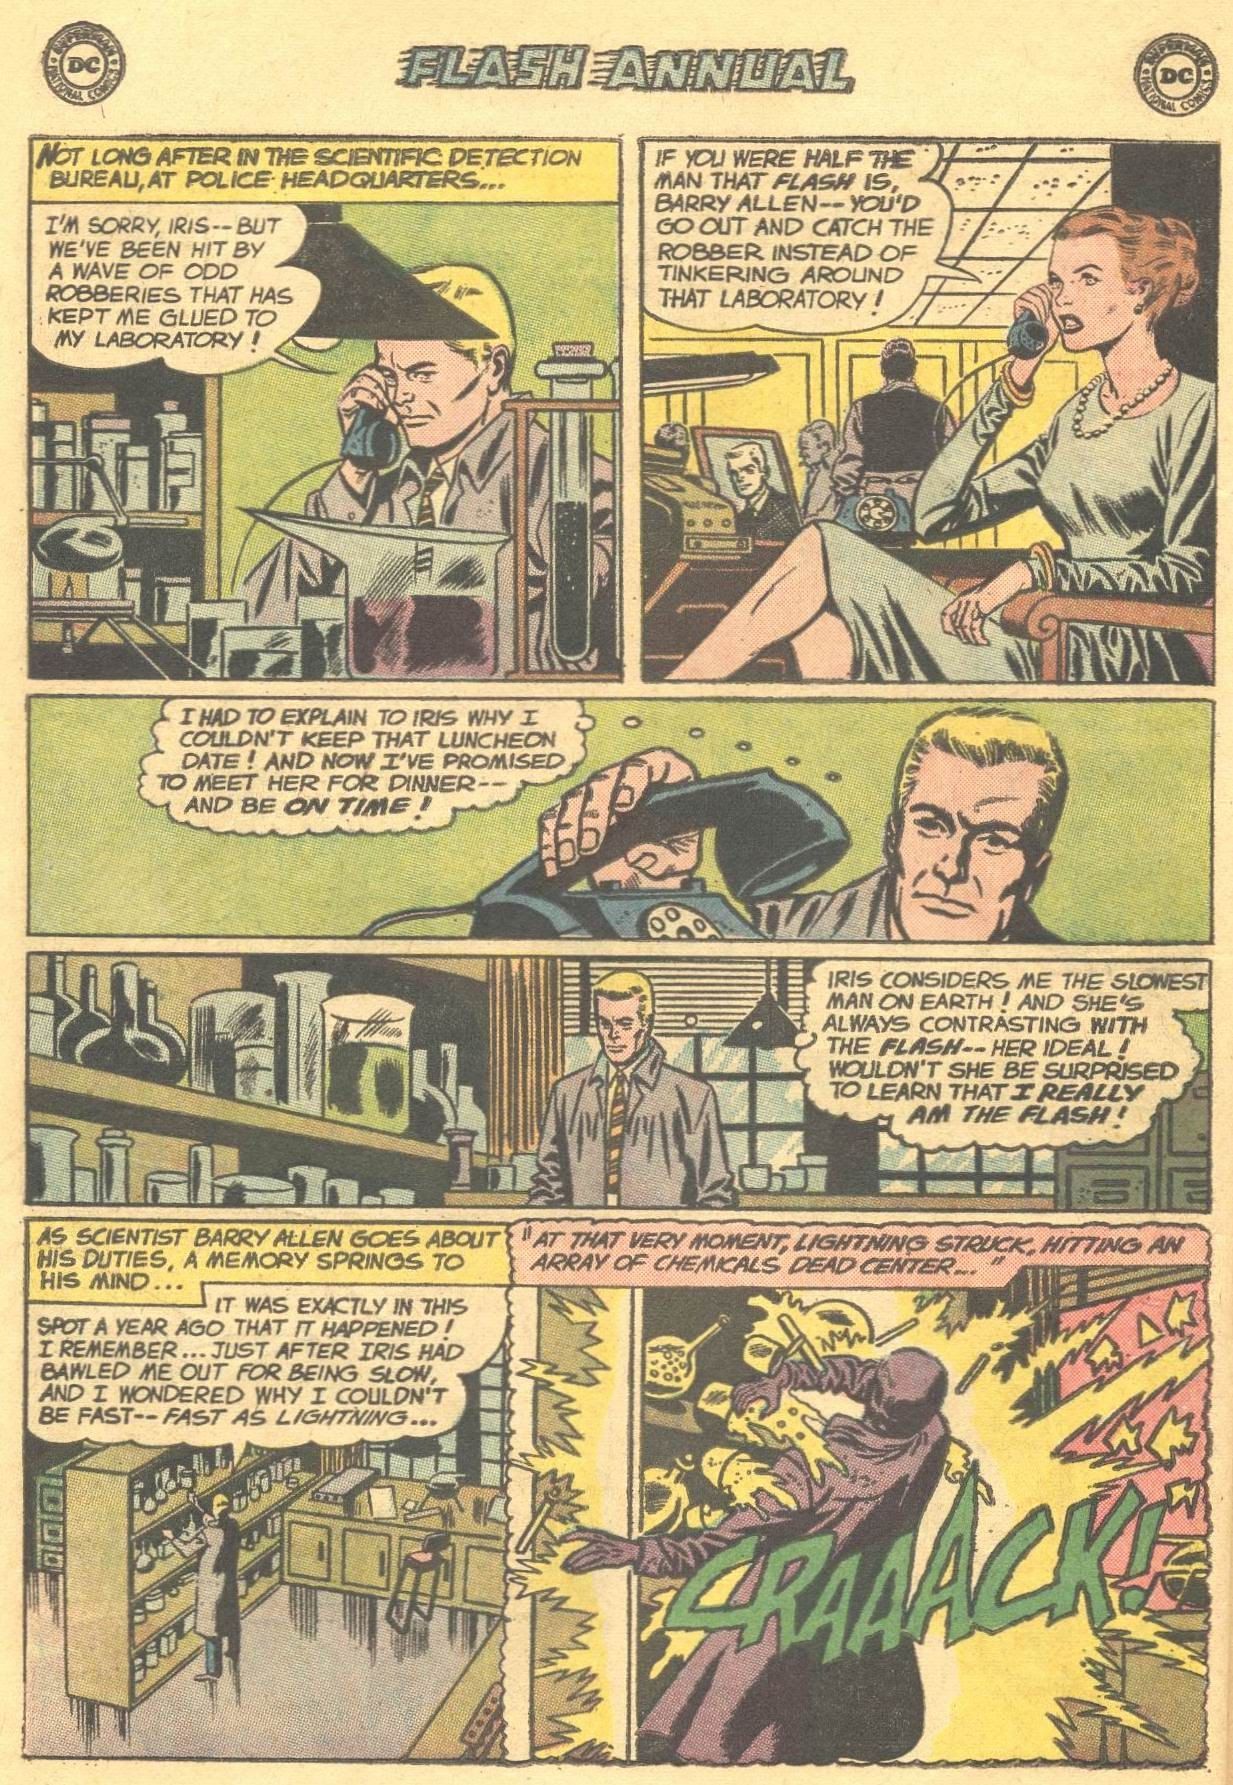 The Flash (1959) Annual #1 (Image via DC Comics) Justice League (Image via DC Comics)